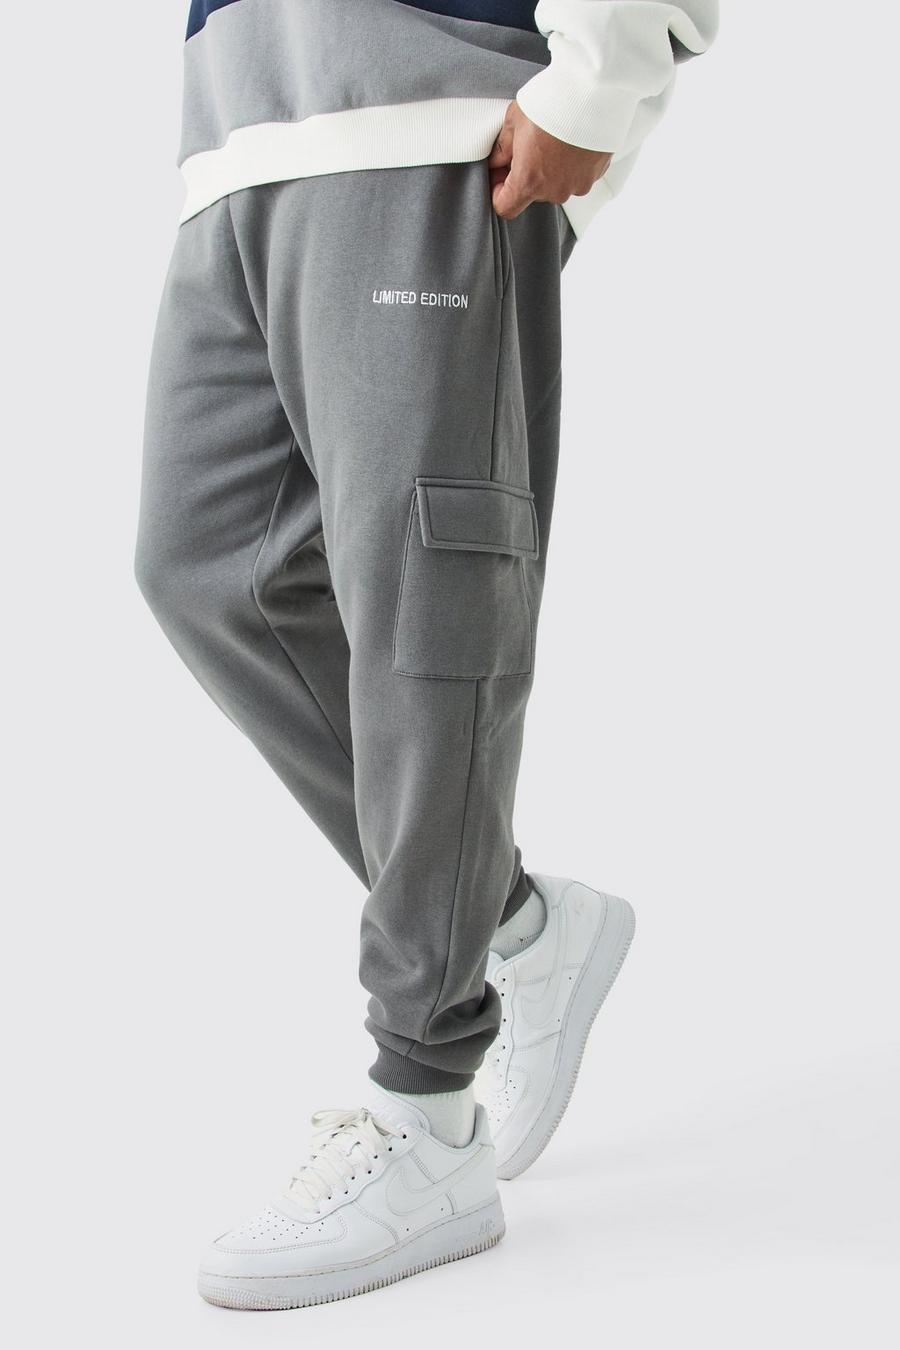 Pantaloni tuta Cargo Plus Size Limited Edition Skinny Fit, Charcoal